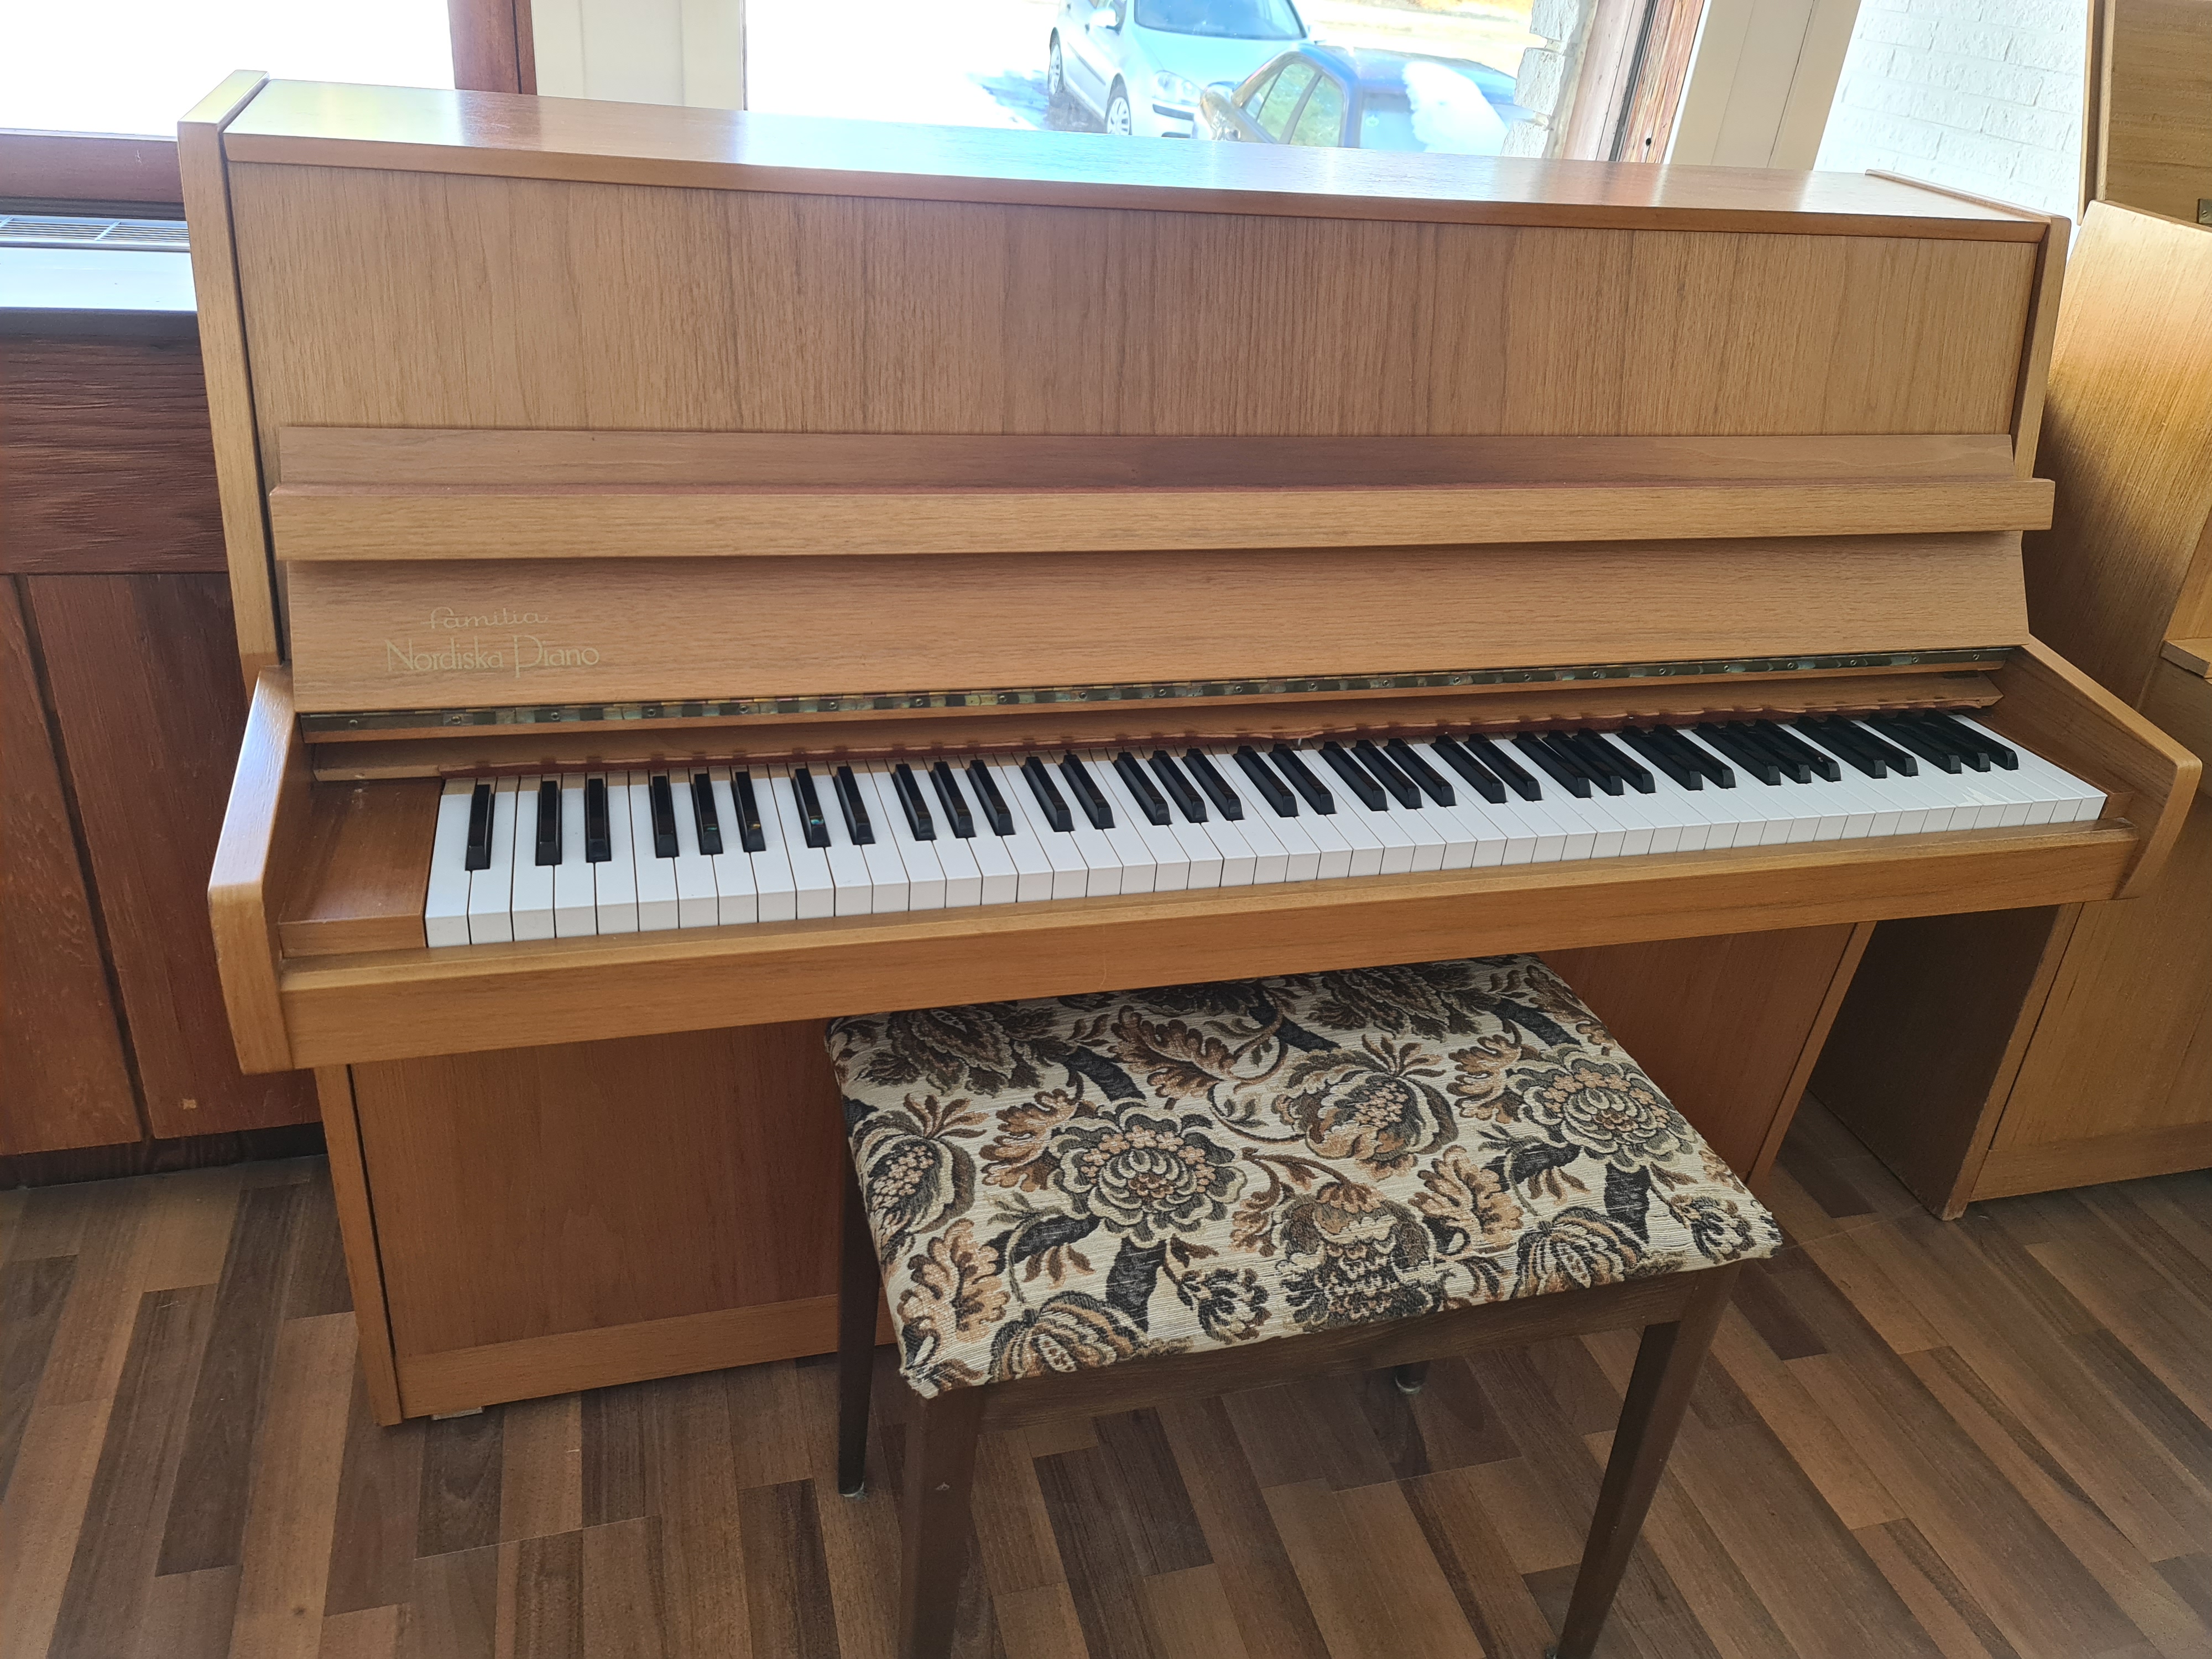 Nordiska Pianofabriken 108 Familia / piano, S